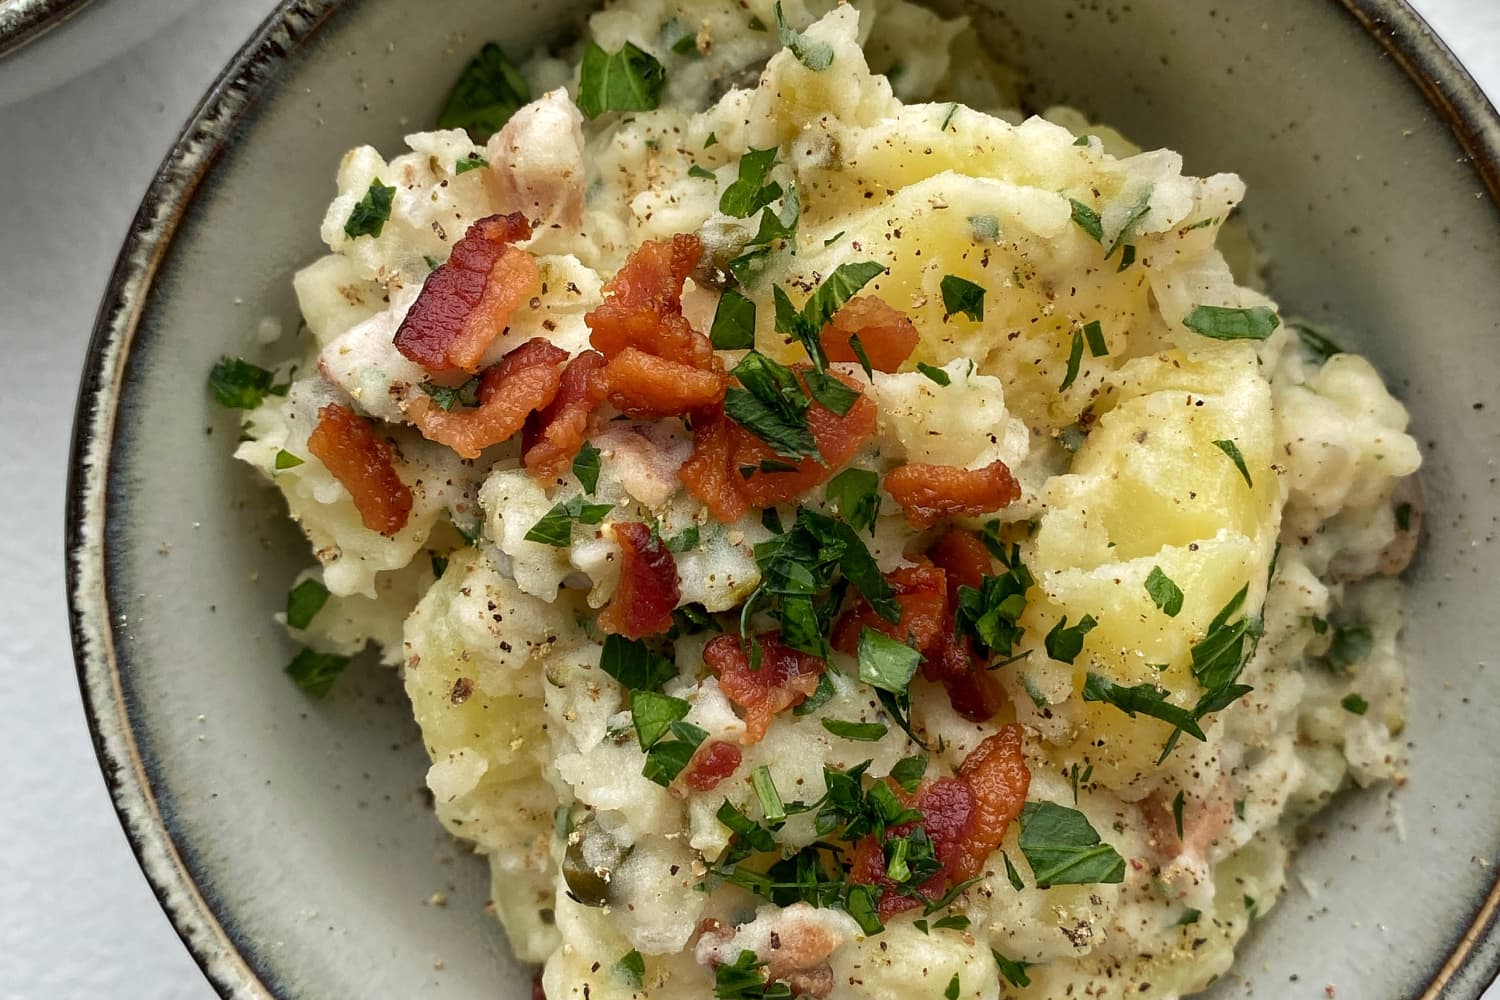 I Tried Curtis Stone's Potato Salad Recipe | The Kitchn